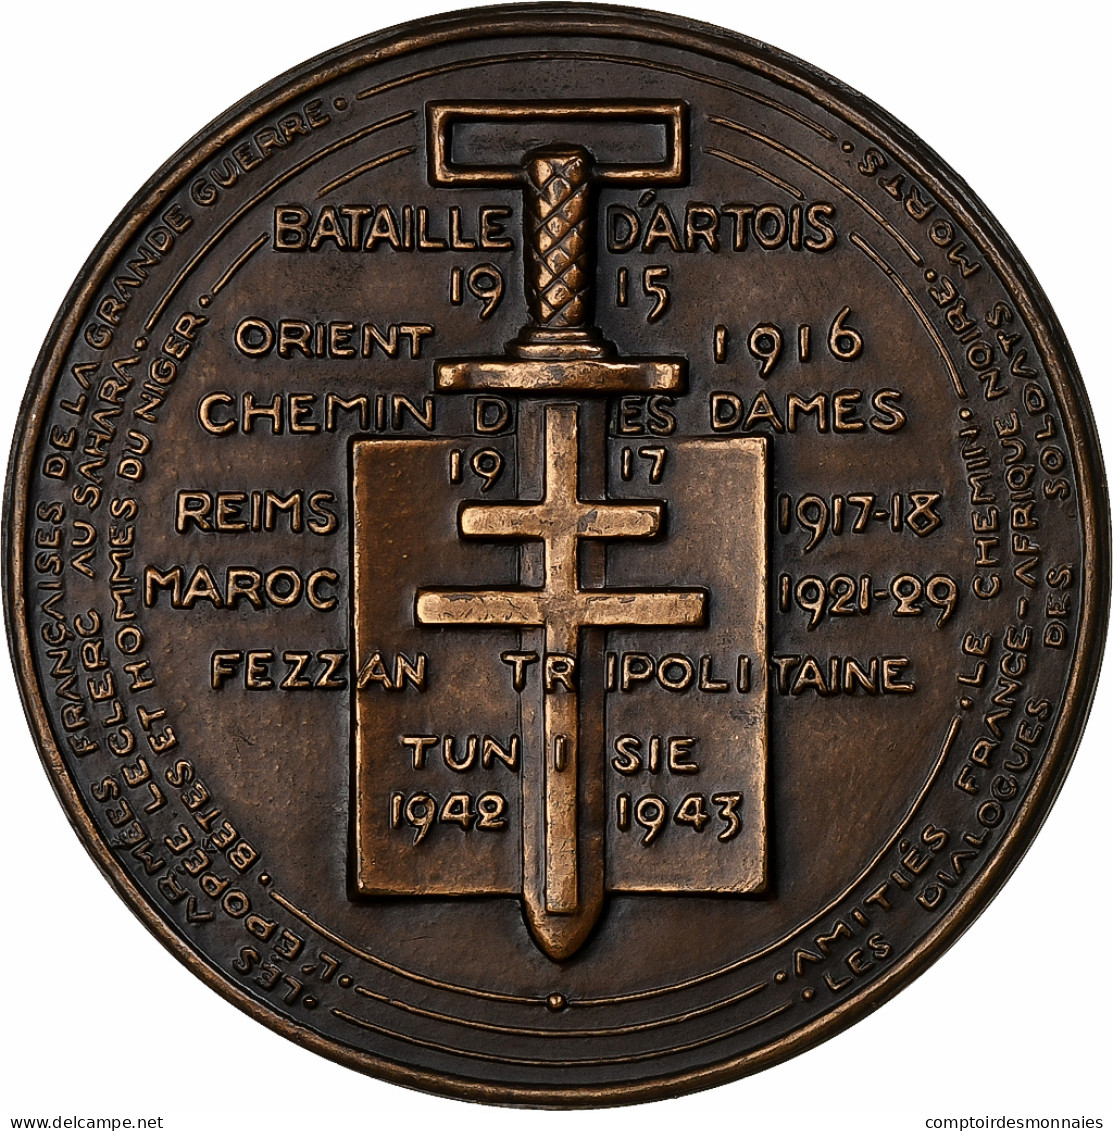 France, Médaille, Général Ingold, 1974, Bronze, Coeffin, SPL - Other & Unclassified